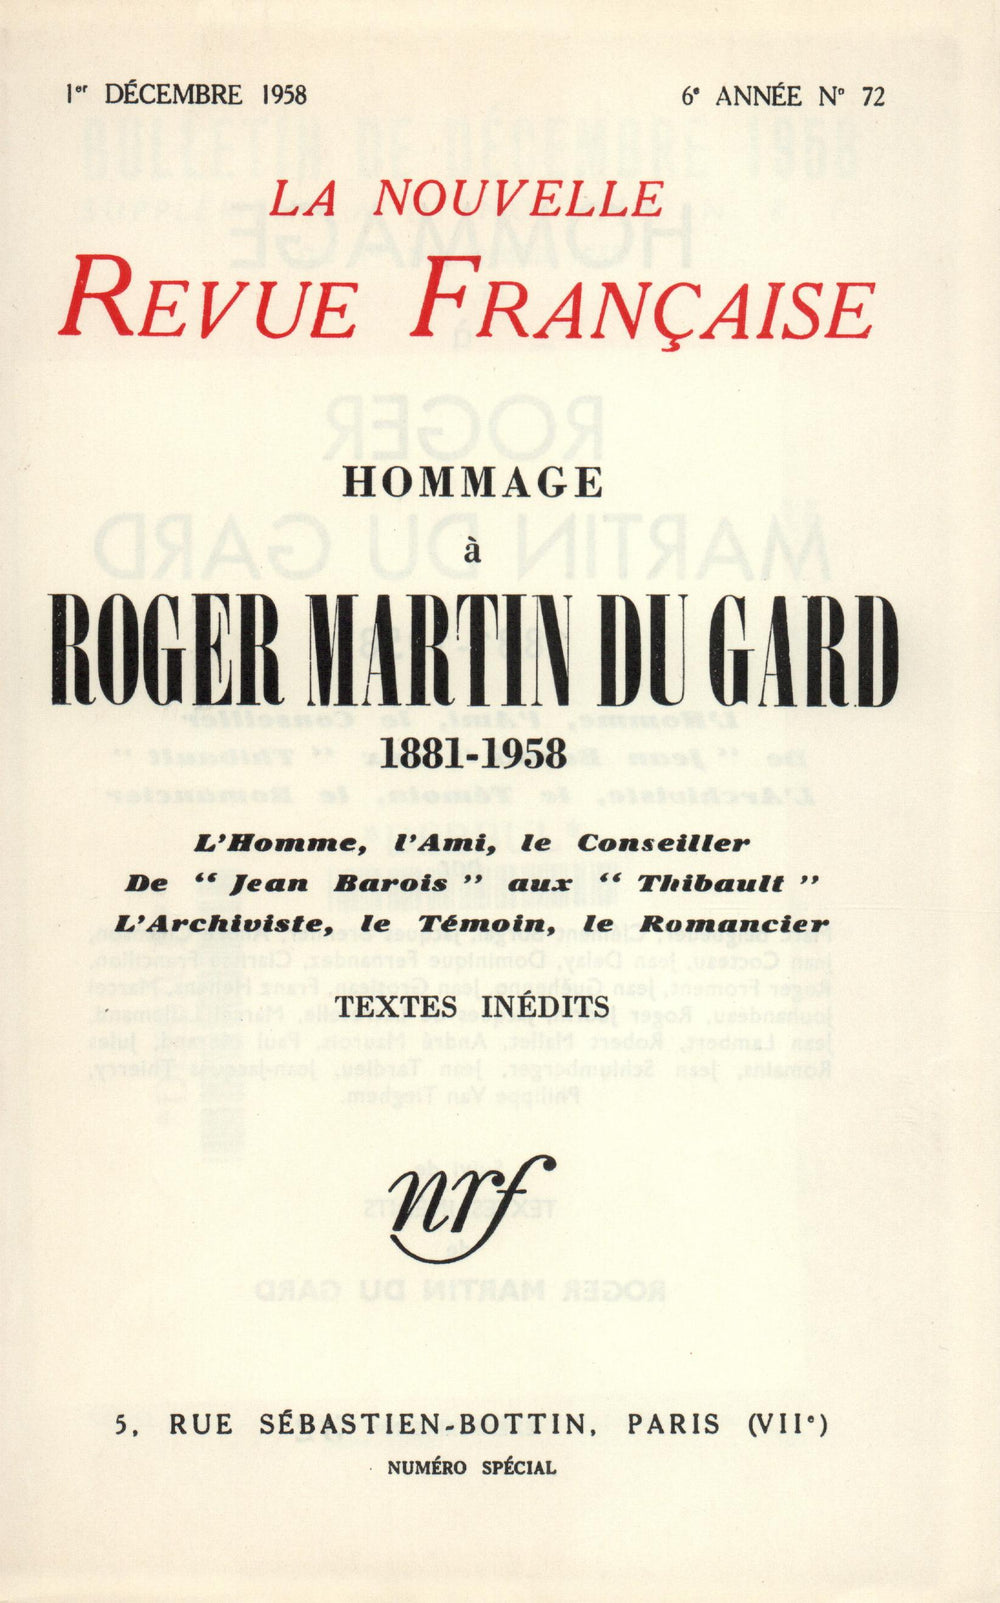 Hommage ŕ Roger Martin du Gard N' 72 (Décembre 1958)